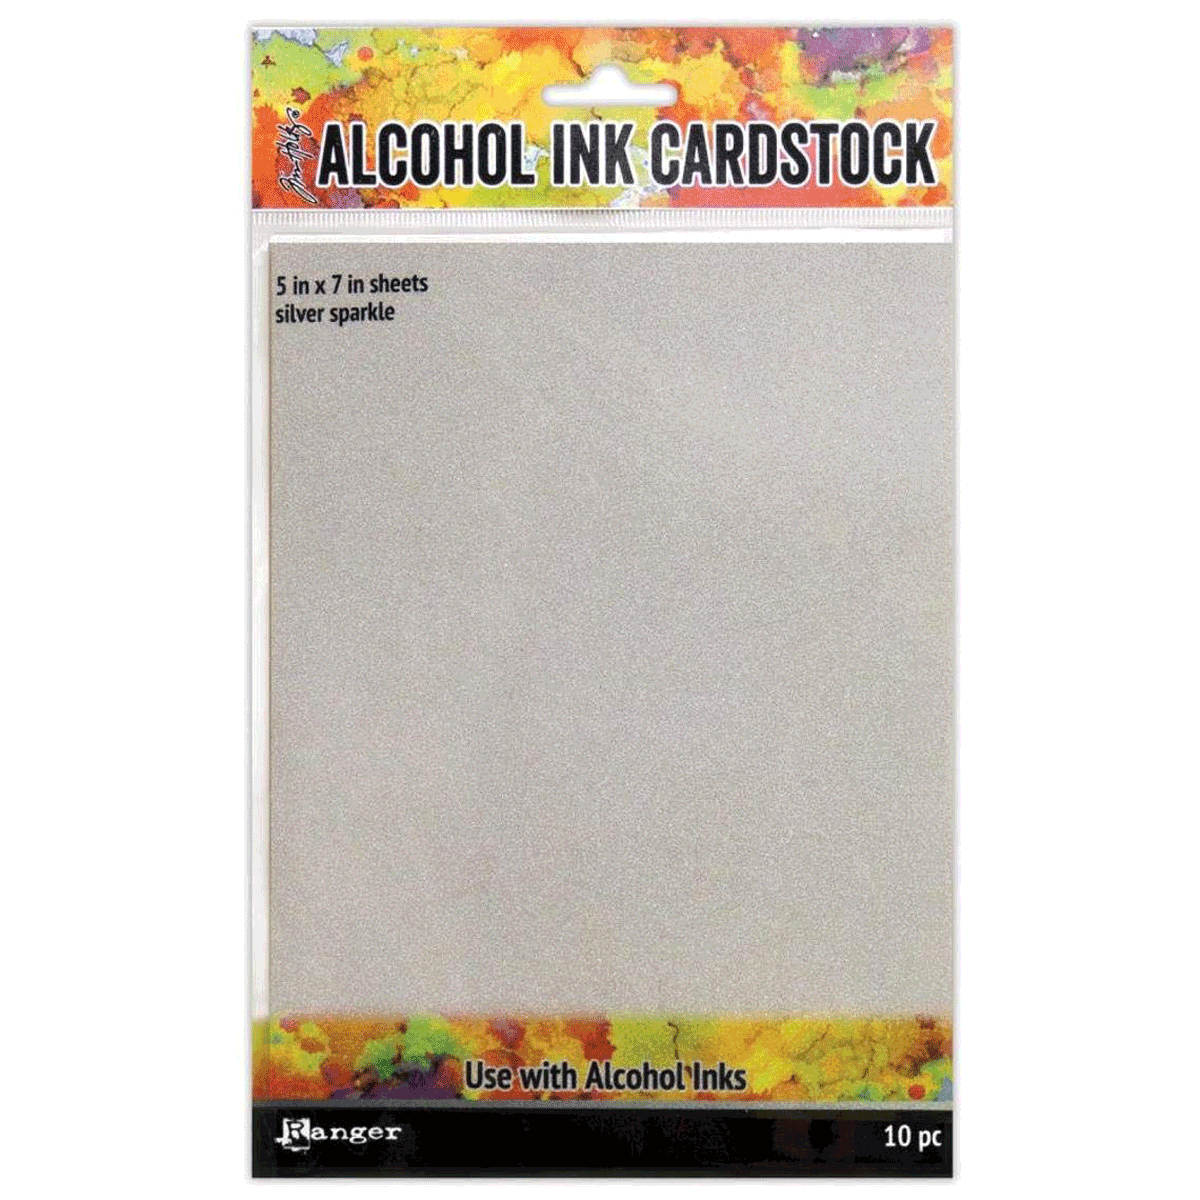 Tim Holtz® Alcohol Ink Cardstock Silver Sparkle, 10 pc